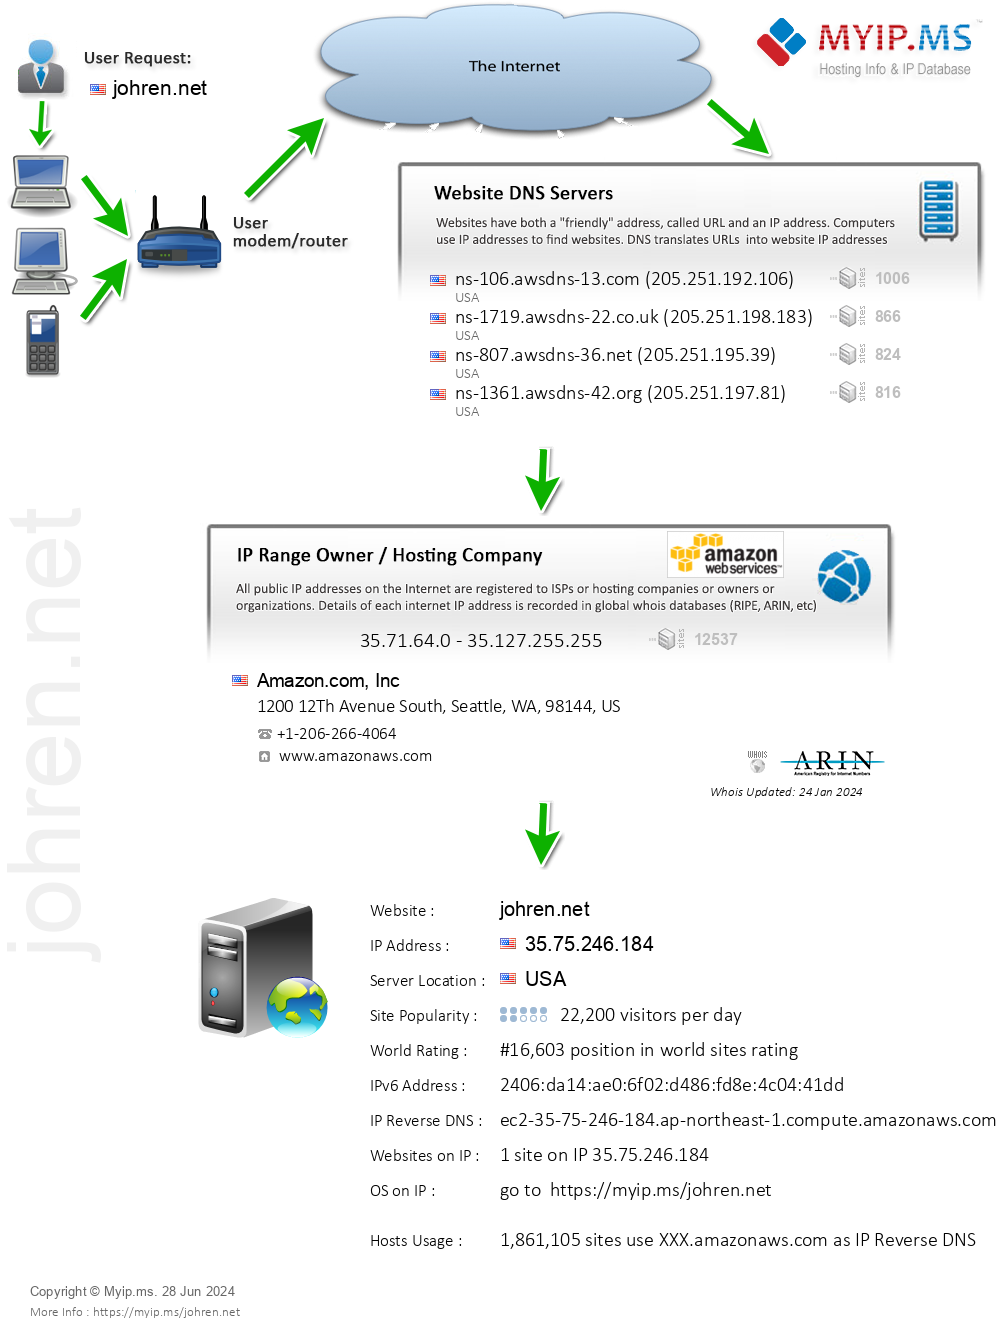 Johren.net - Website Hosting Visual IP Diagram